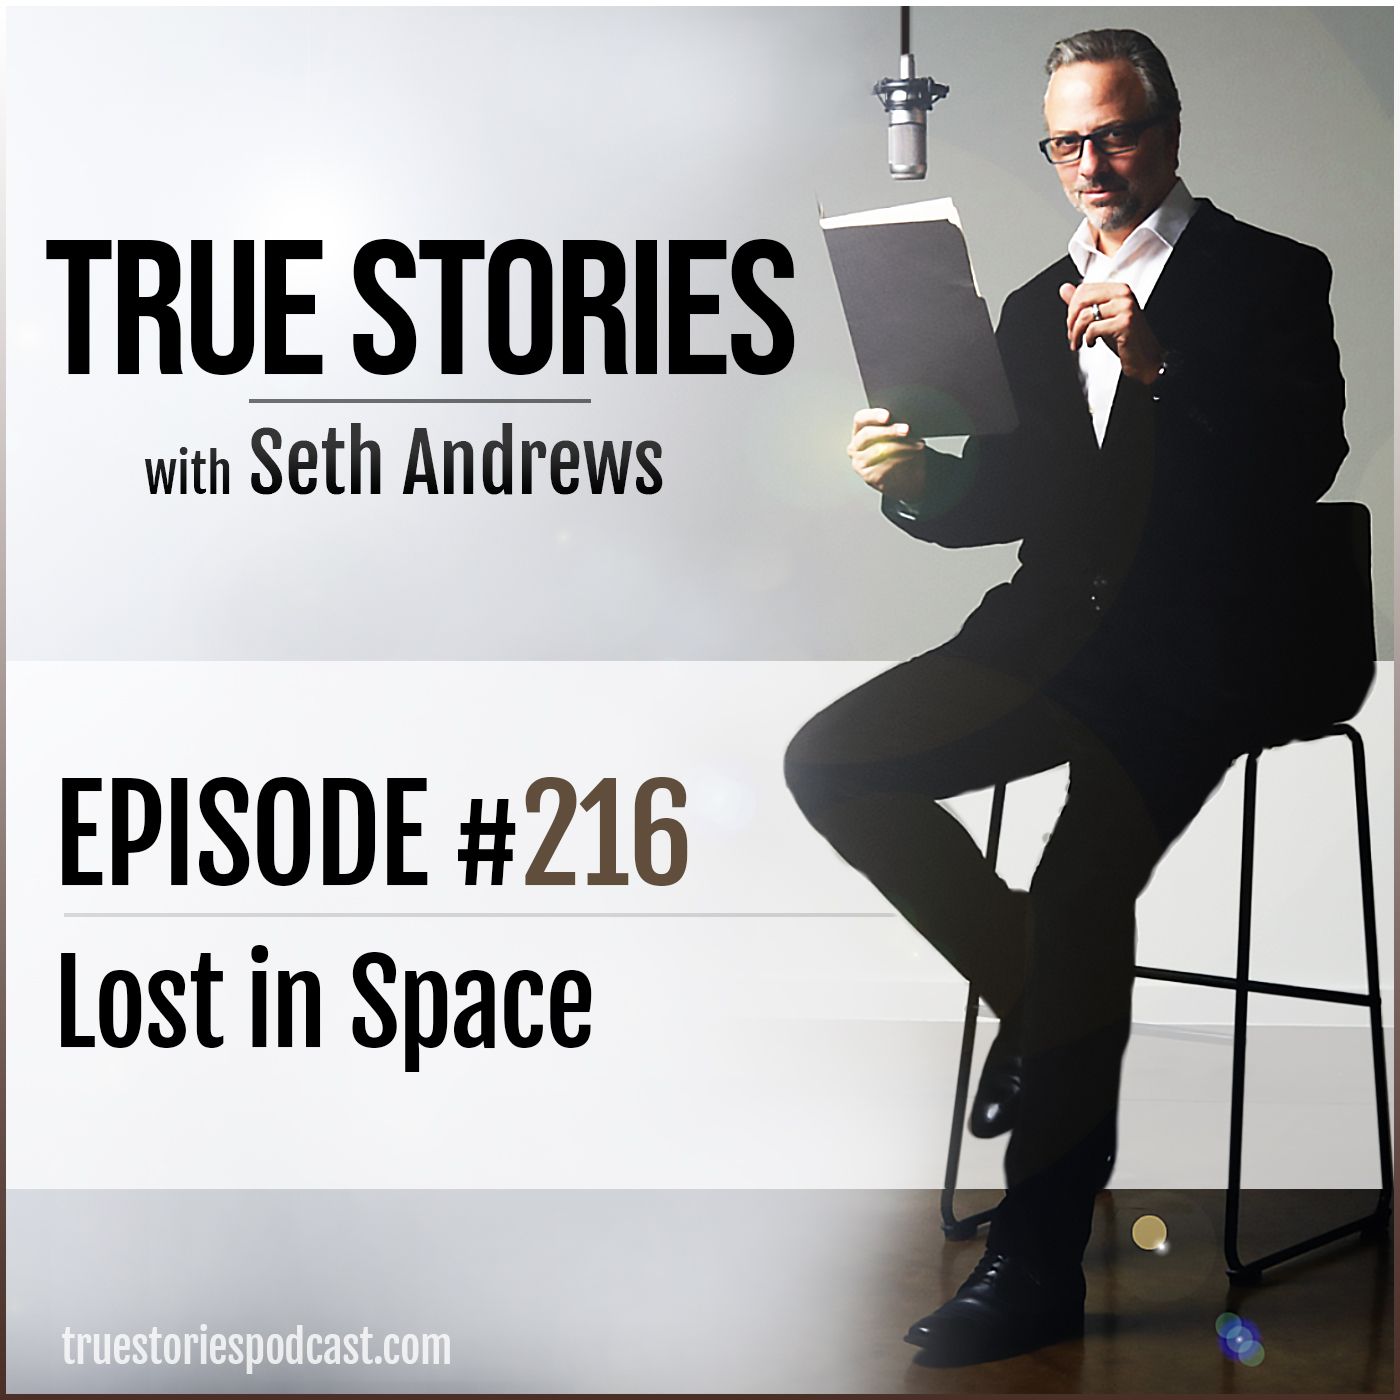 True Stories #216 - Lost in Space